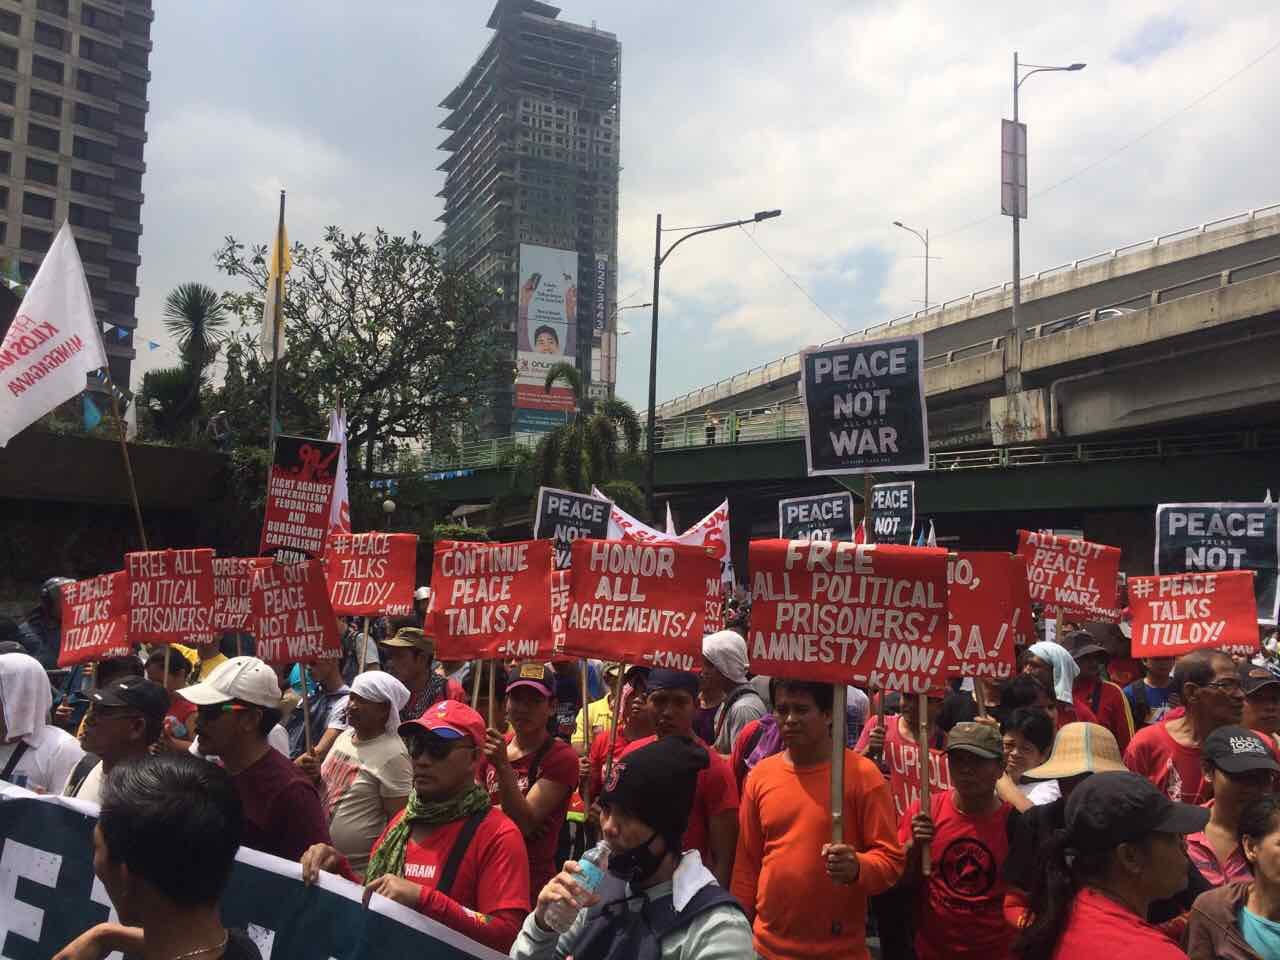 Leftist groups demand ‘genuine change’ on 31st EDSA anniversary